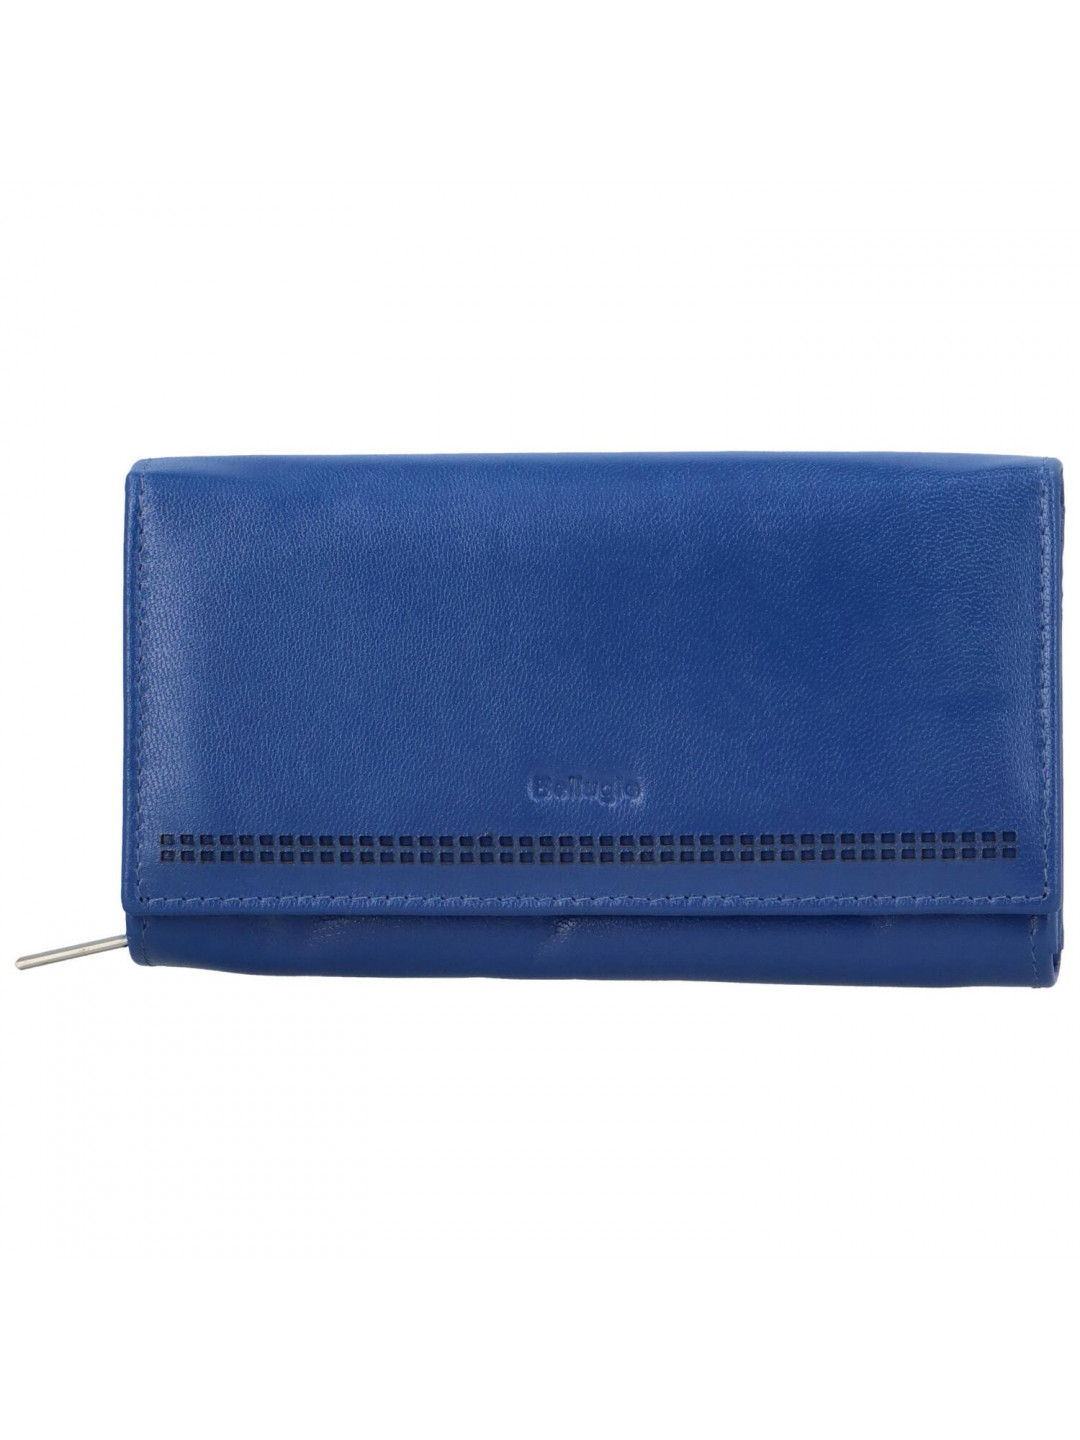 Dámská kožená peněženka Bellugio Utaraxa tmavě modrá